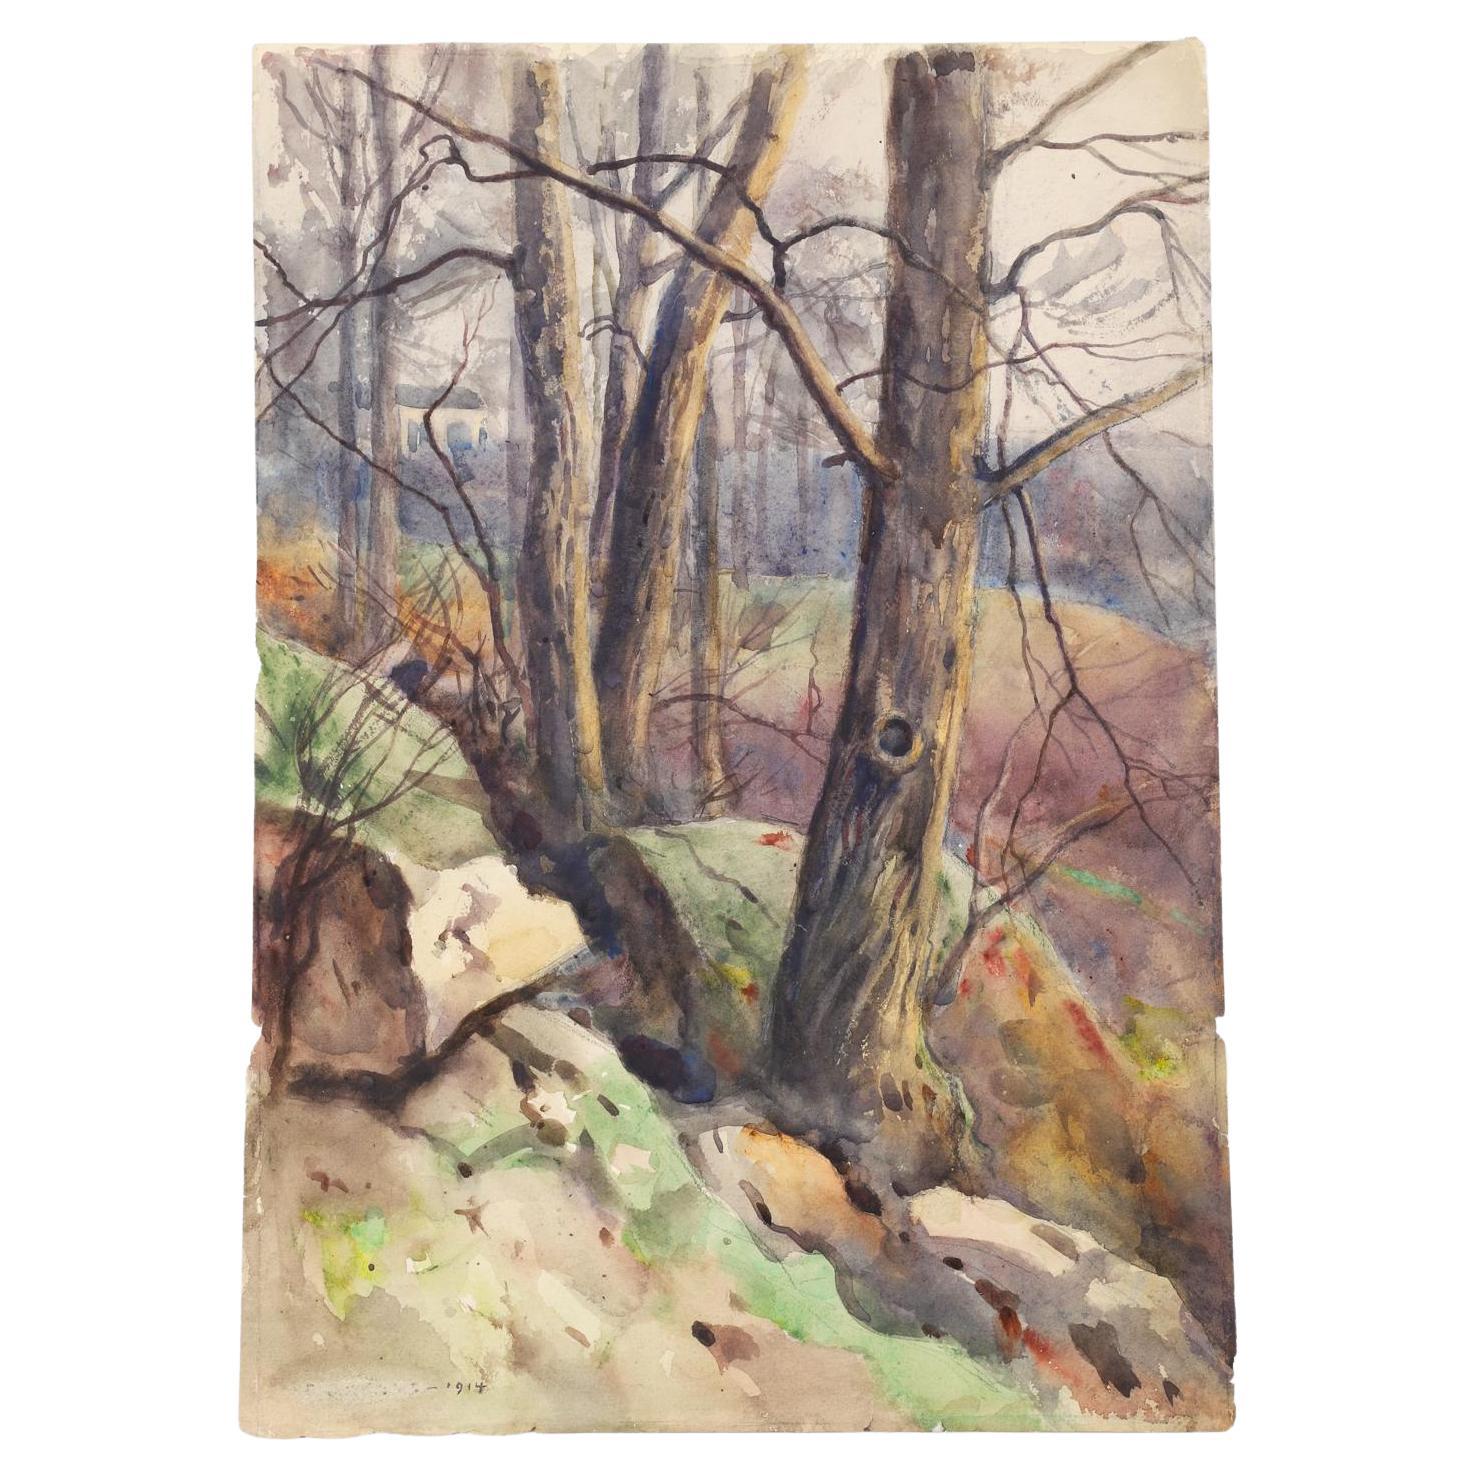 1914 Rocky Hillside Landscape Egbert Cadmus Watercolor Painting